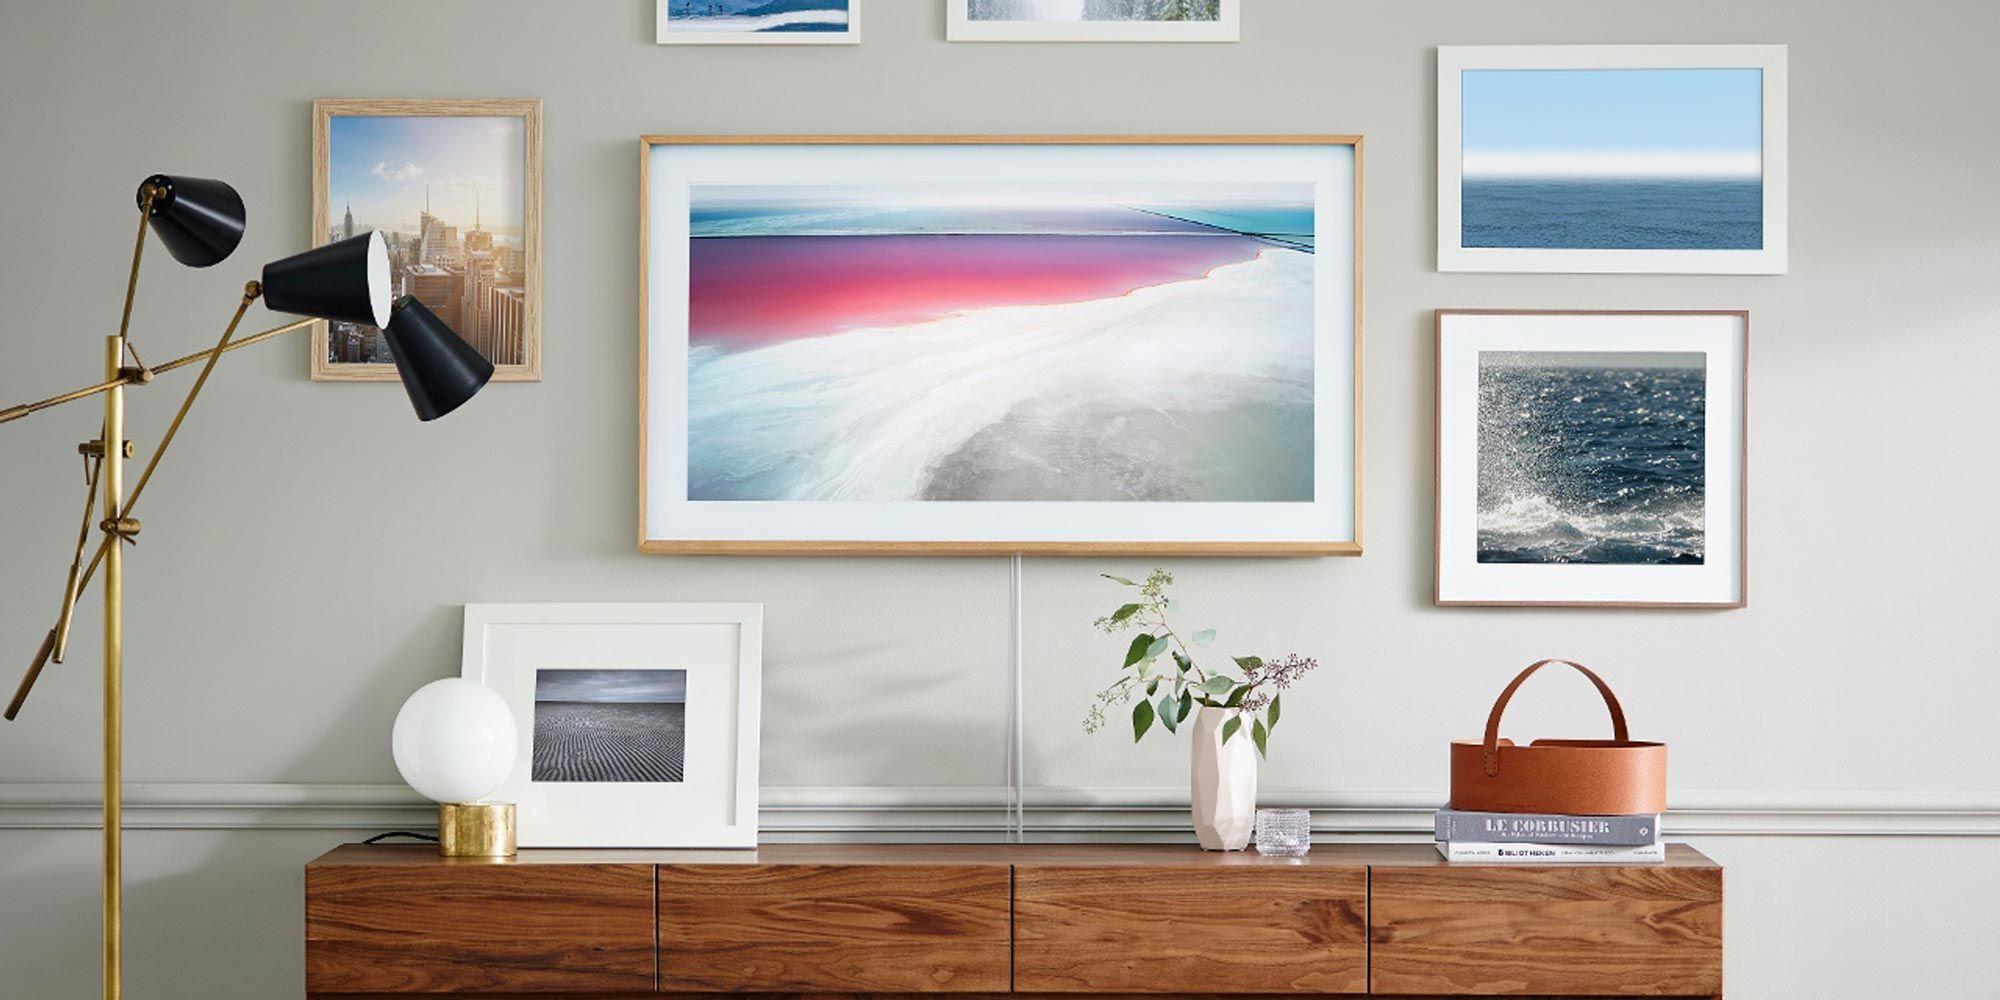 Samsung Frame TV over wooden desk, gallery wall